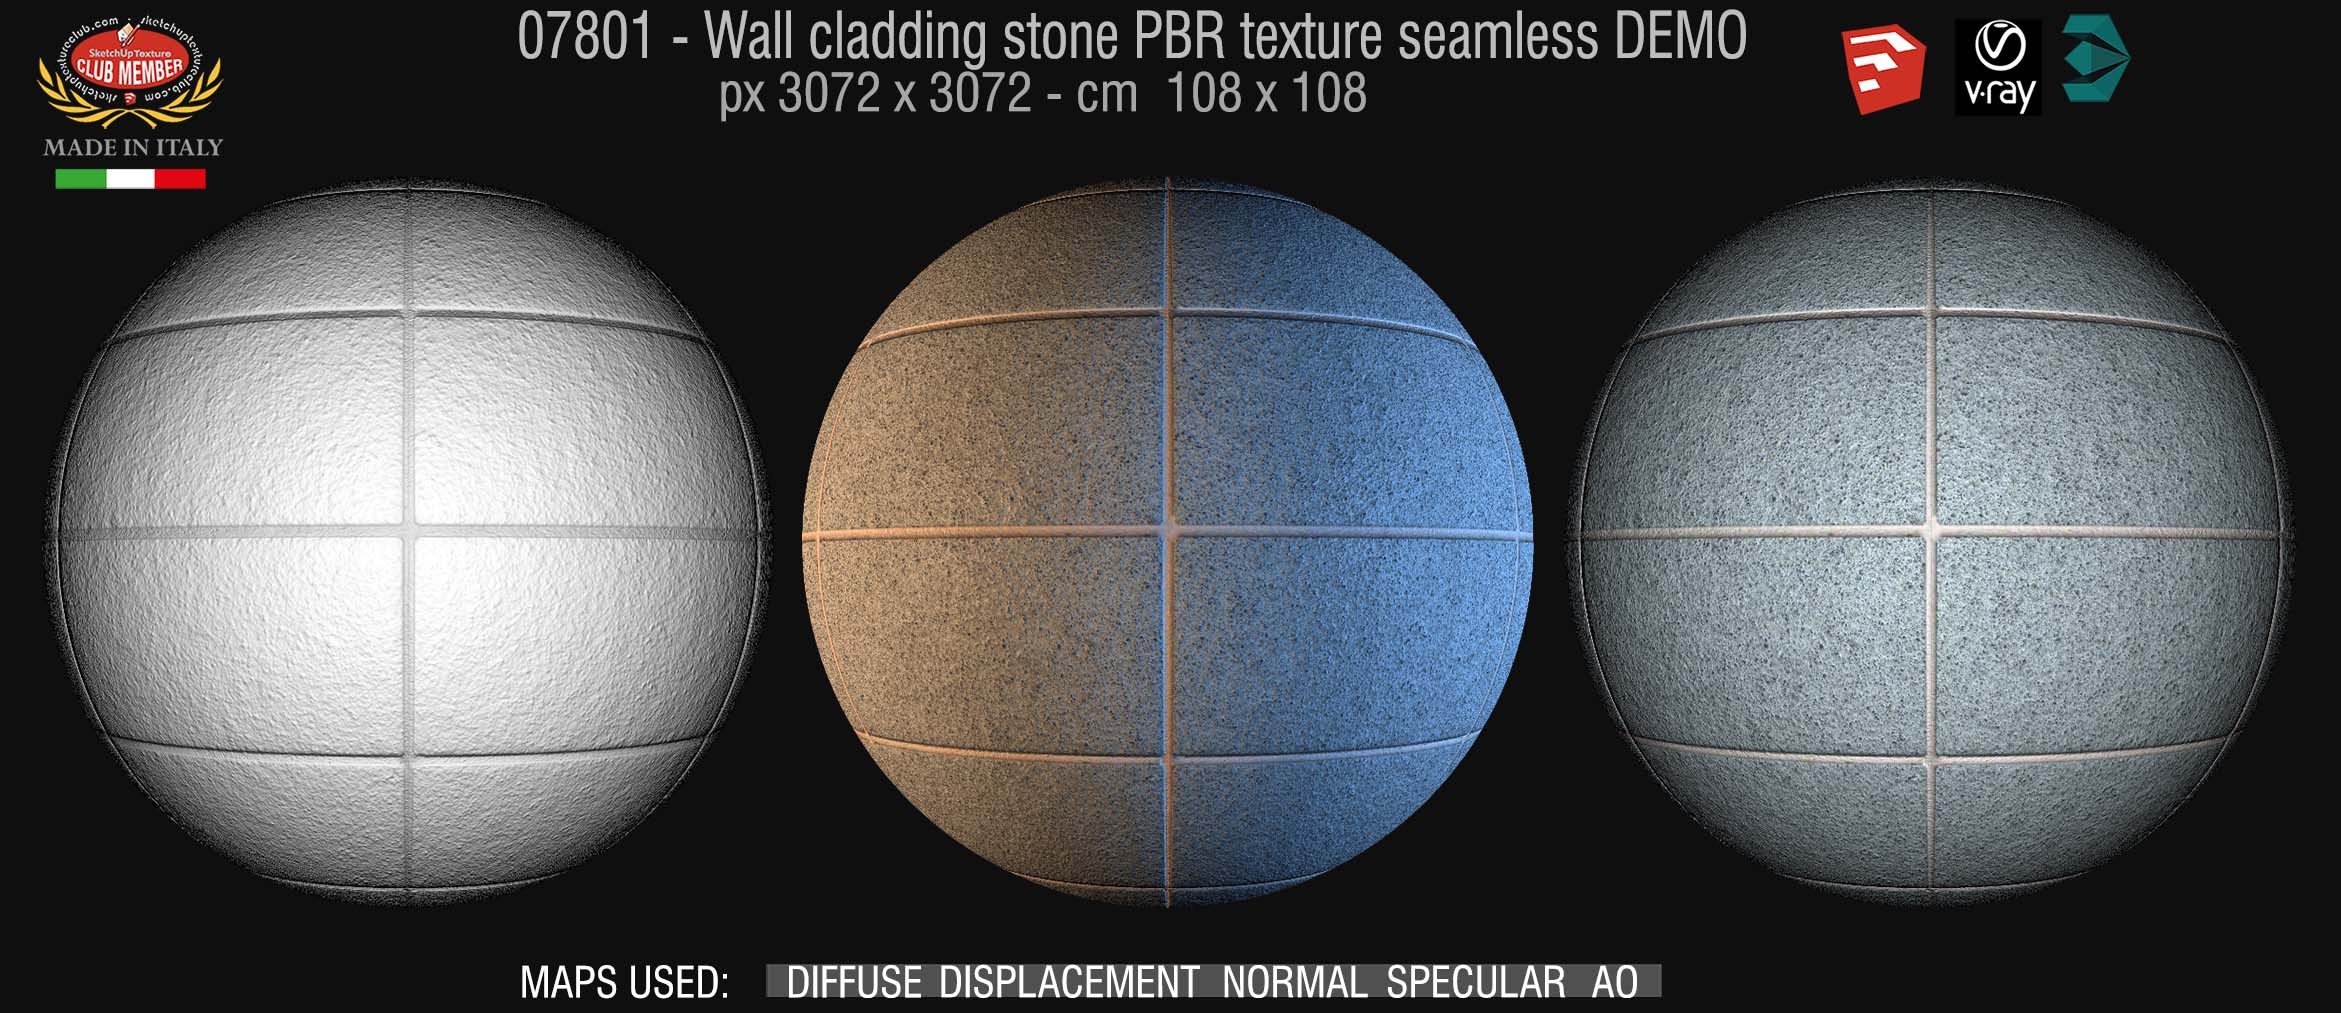 07801 Wall cladding stone texture seamless DEMO